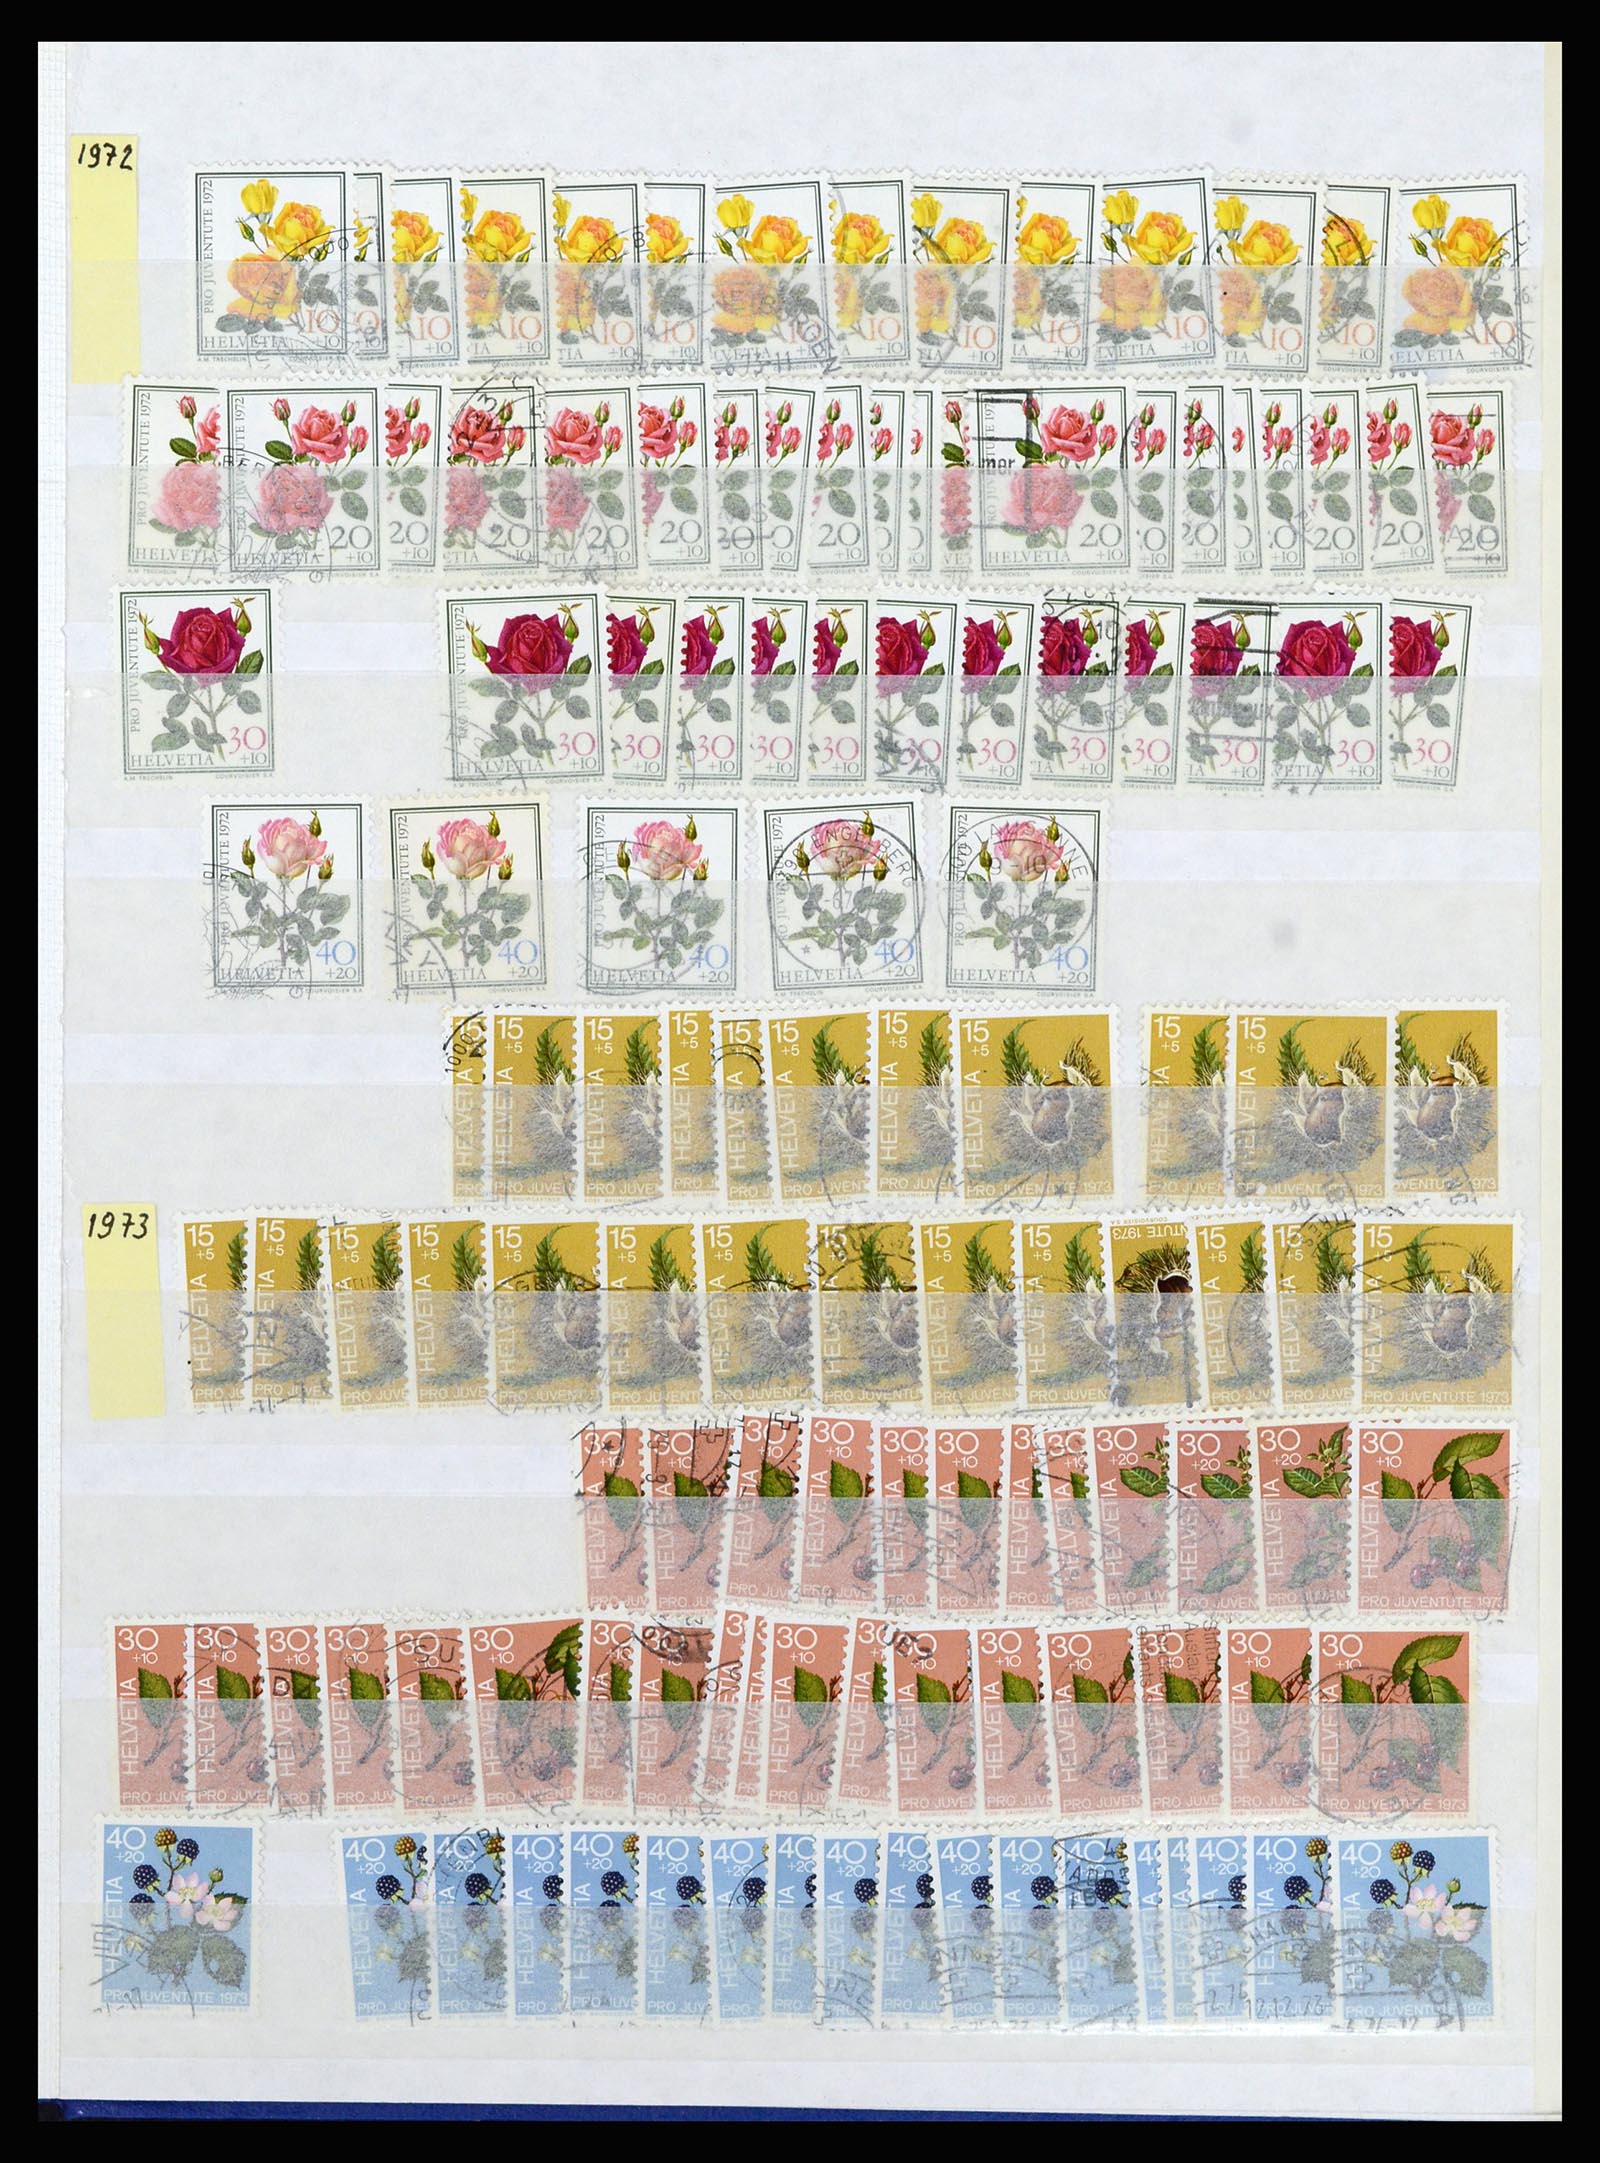 37061 023 - Stamp collection 37061 Switzerland 1913-2000.